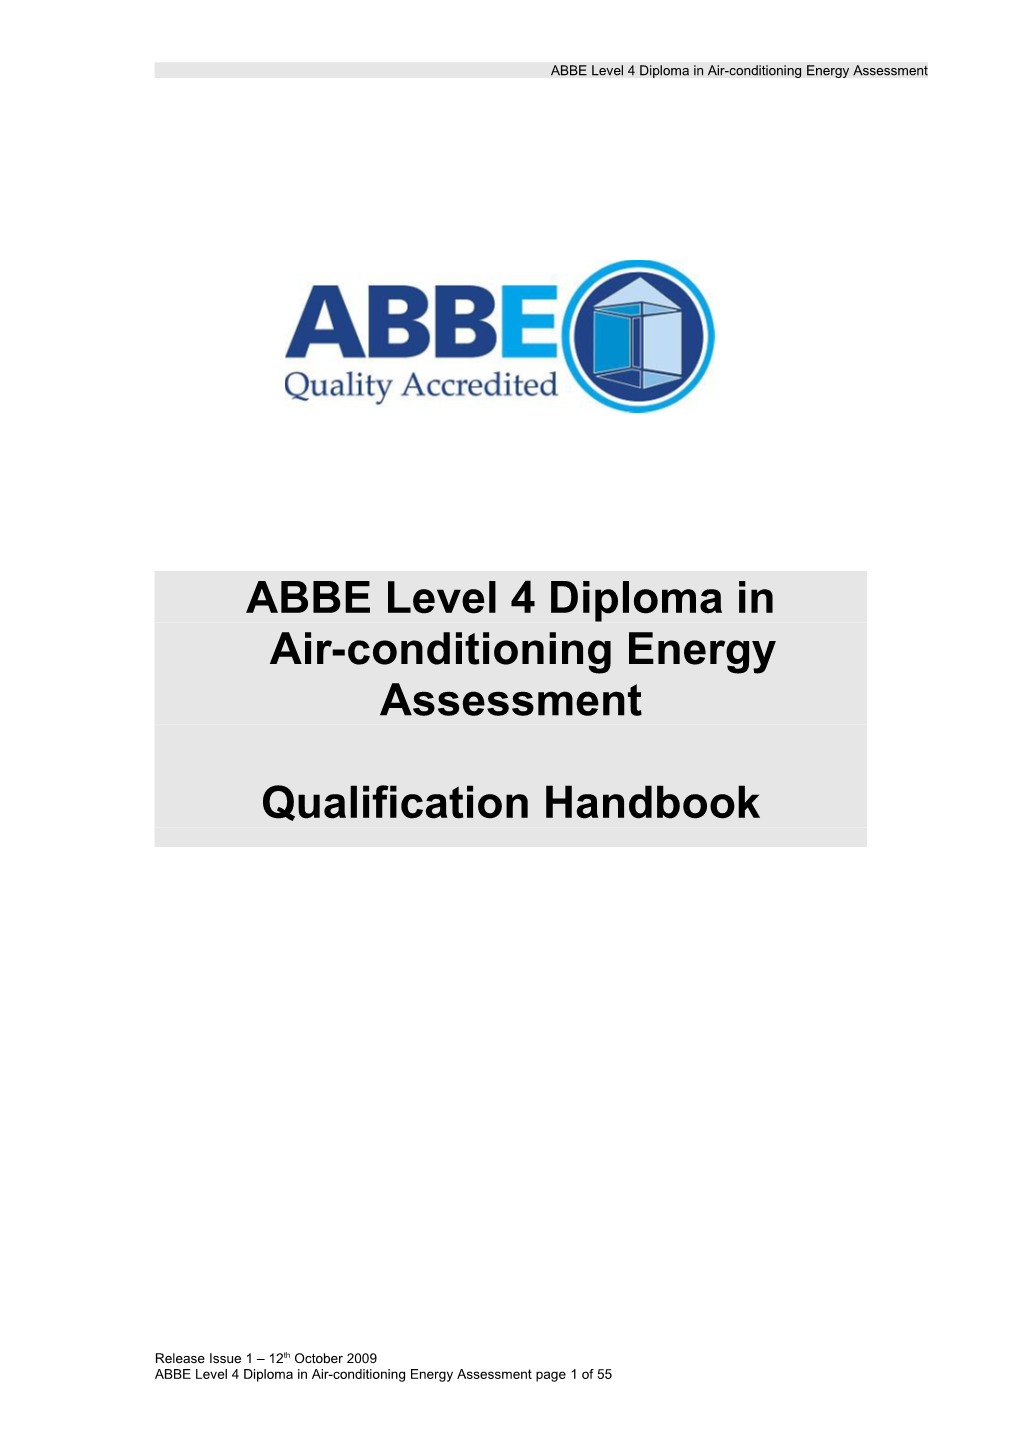 ABBE ACEA Qualification Handbook